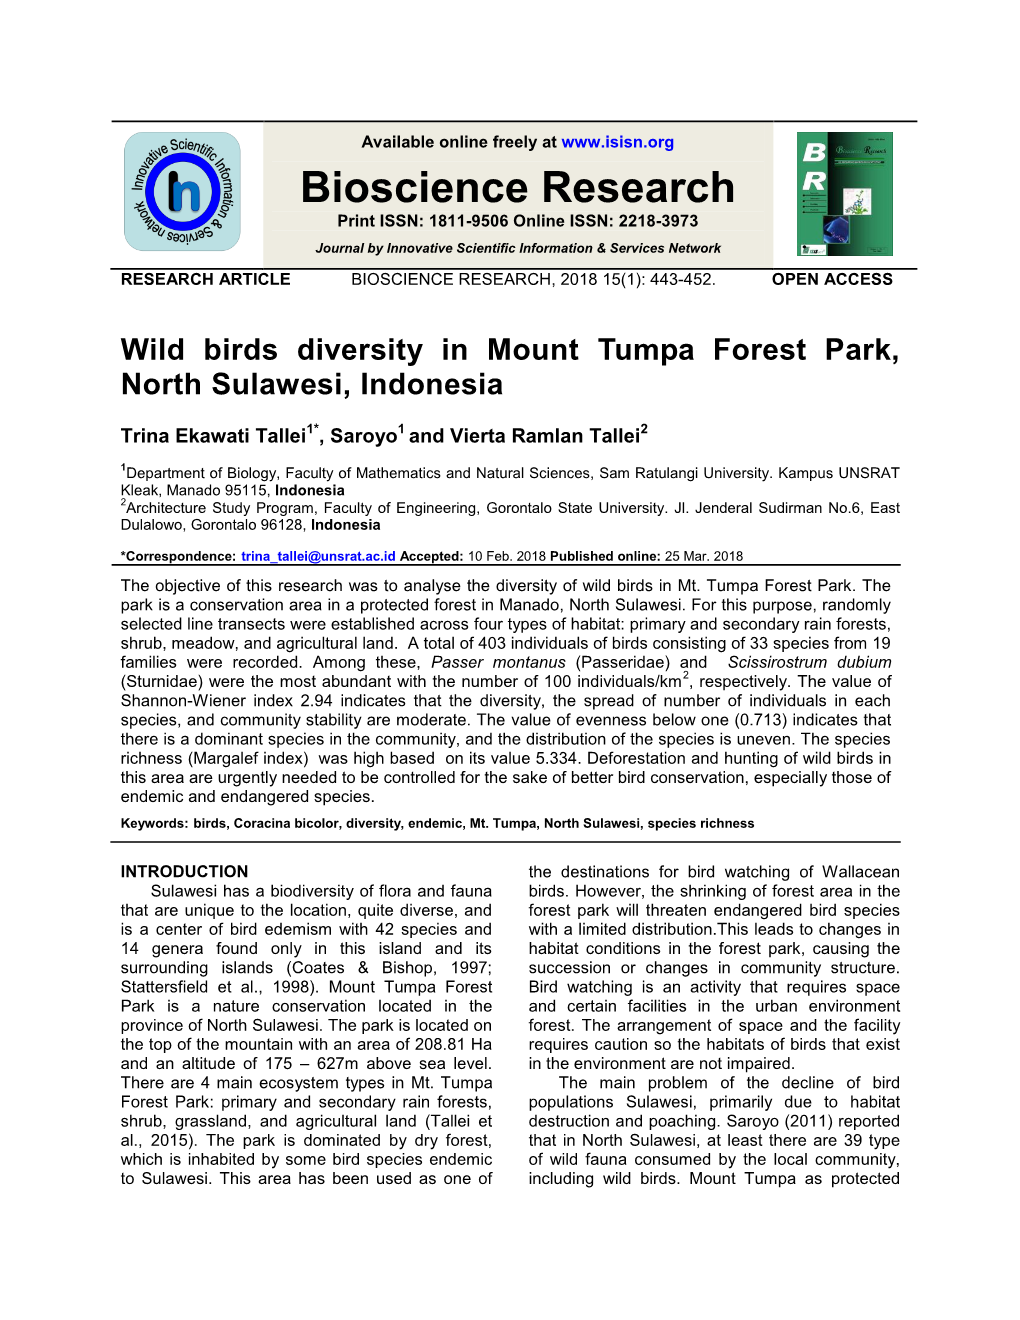 Tallei Et Al., Wild Birds Diversity in Mt